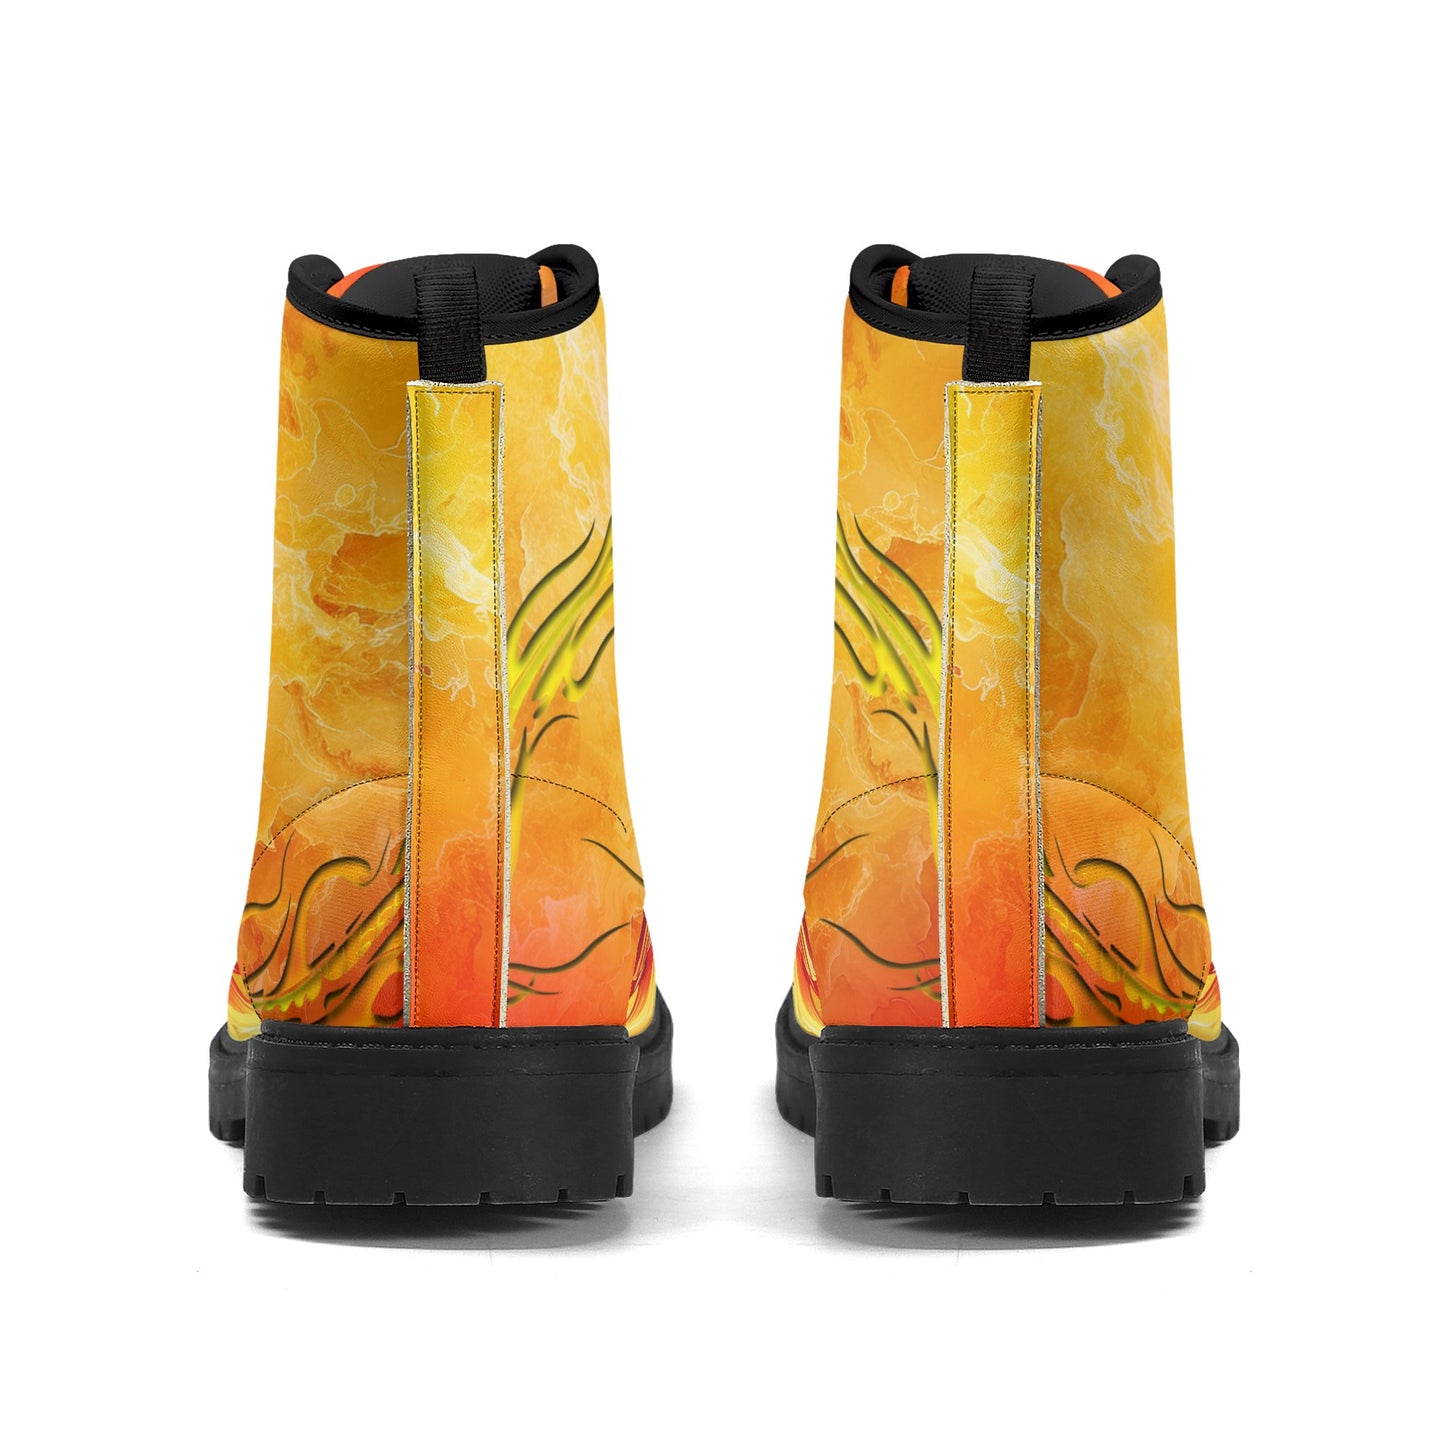 Neduz Unisex Fiery Magma Dragon Print Leather Boots - Eco-Friendly, Waterproof